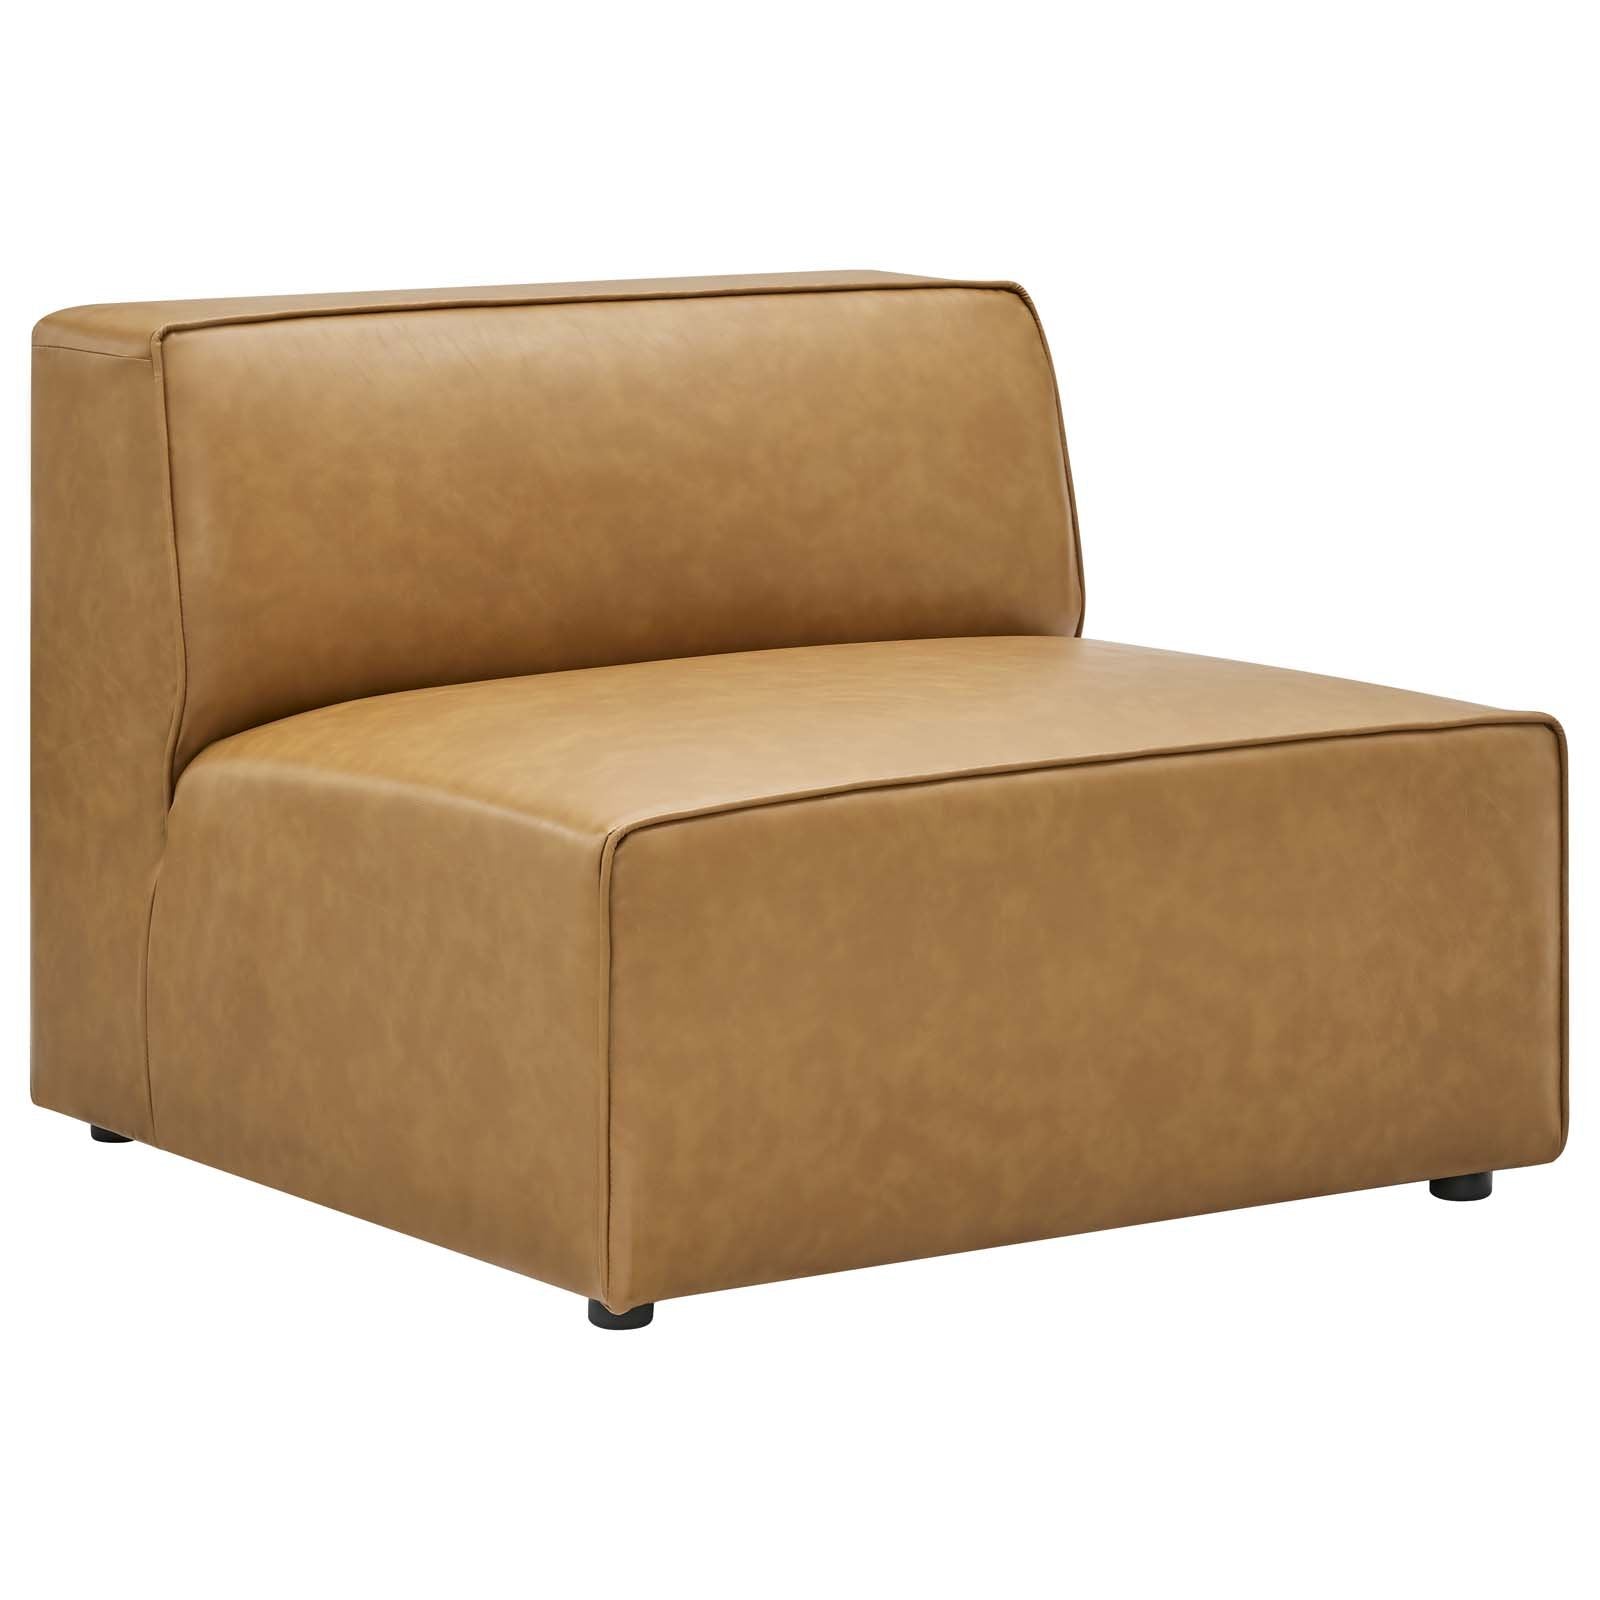 Mingle Vegan Leather Armless Chair - East Shore Modern Home Furnishings